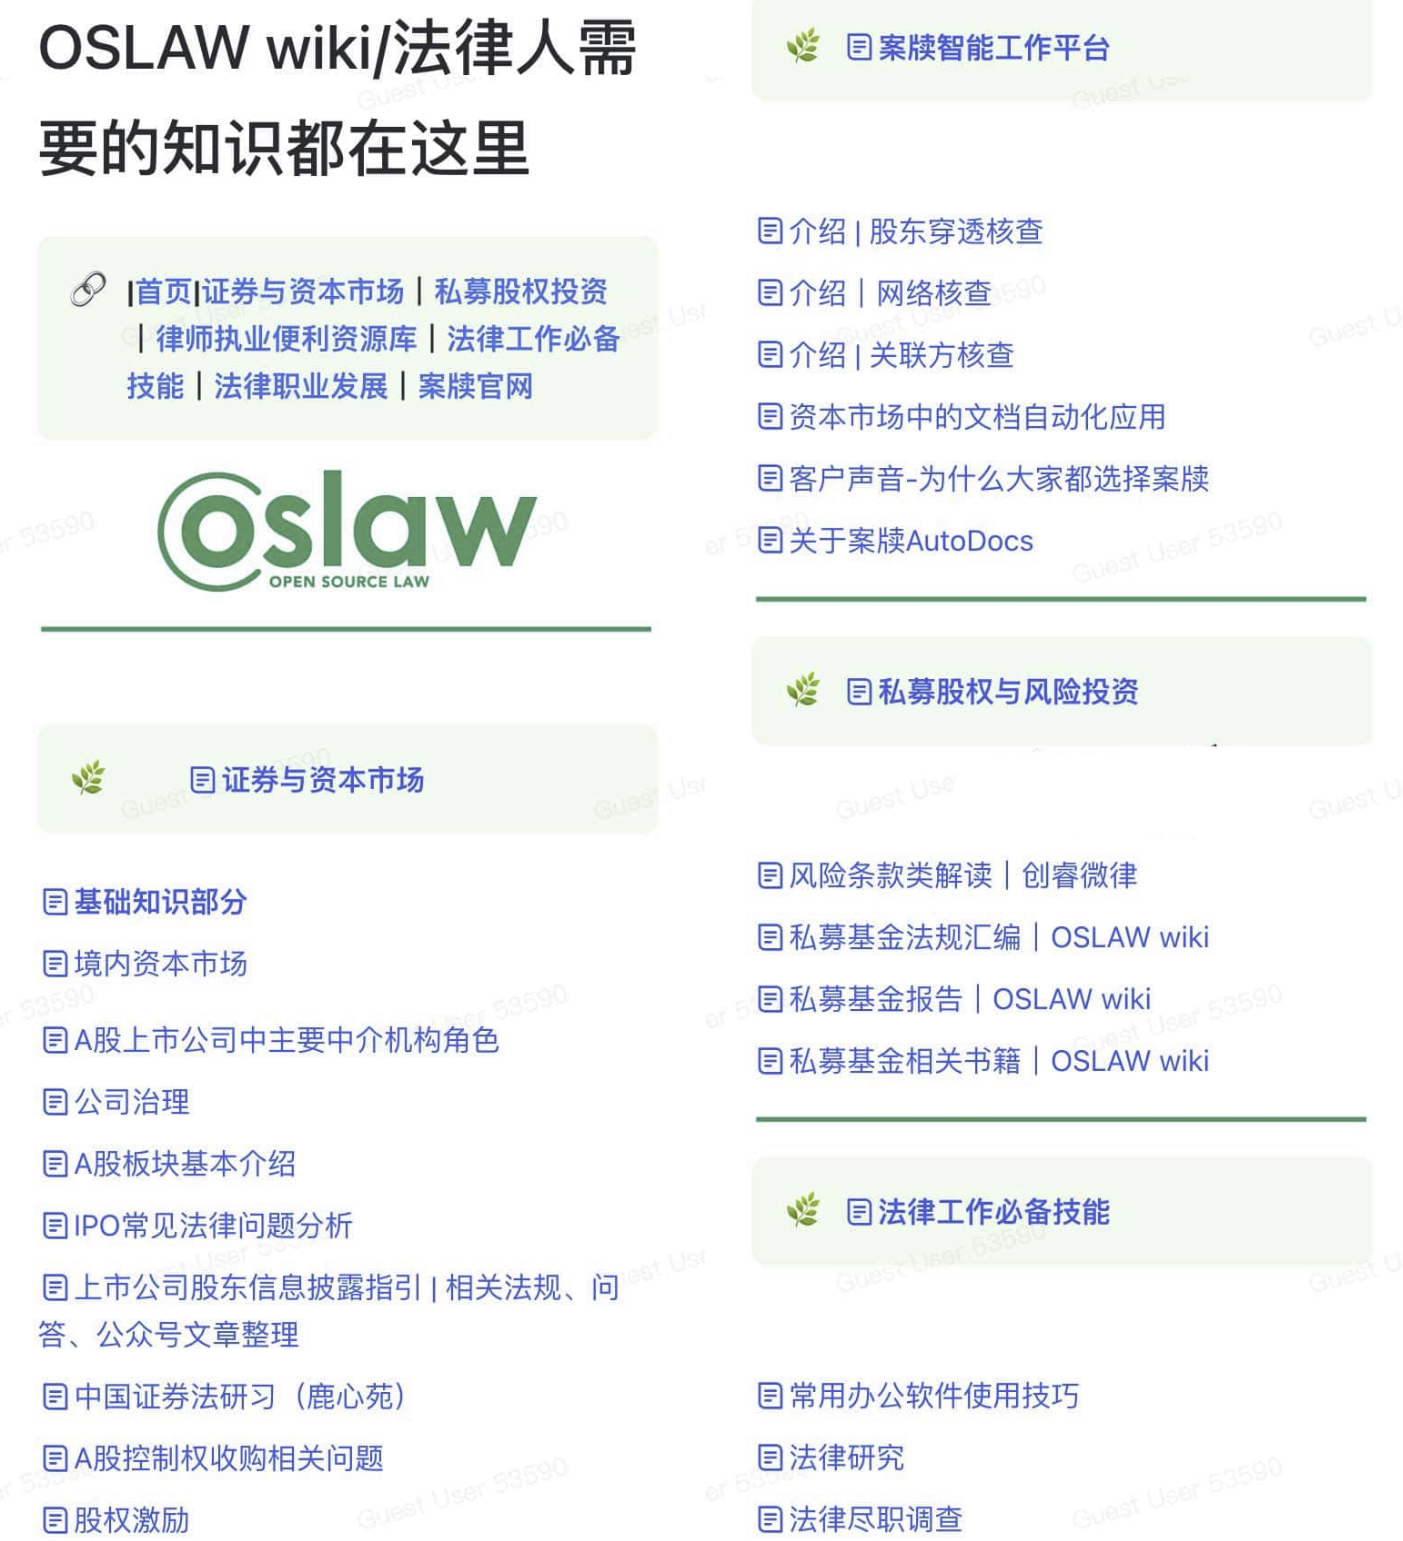 OSLAW wiki-在线法律人专业知识库-学点AIweb3中心